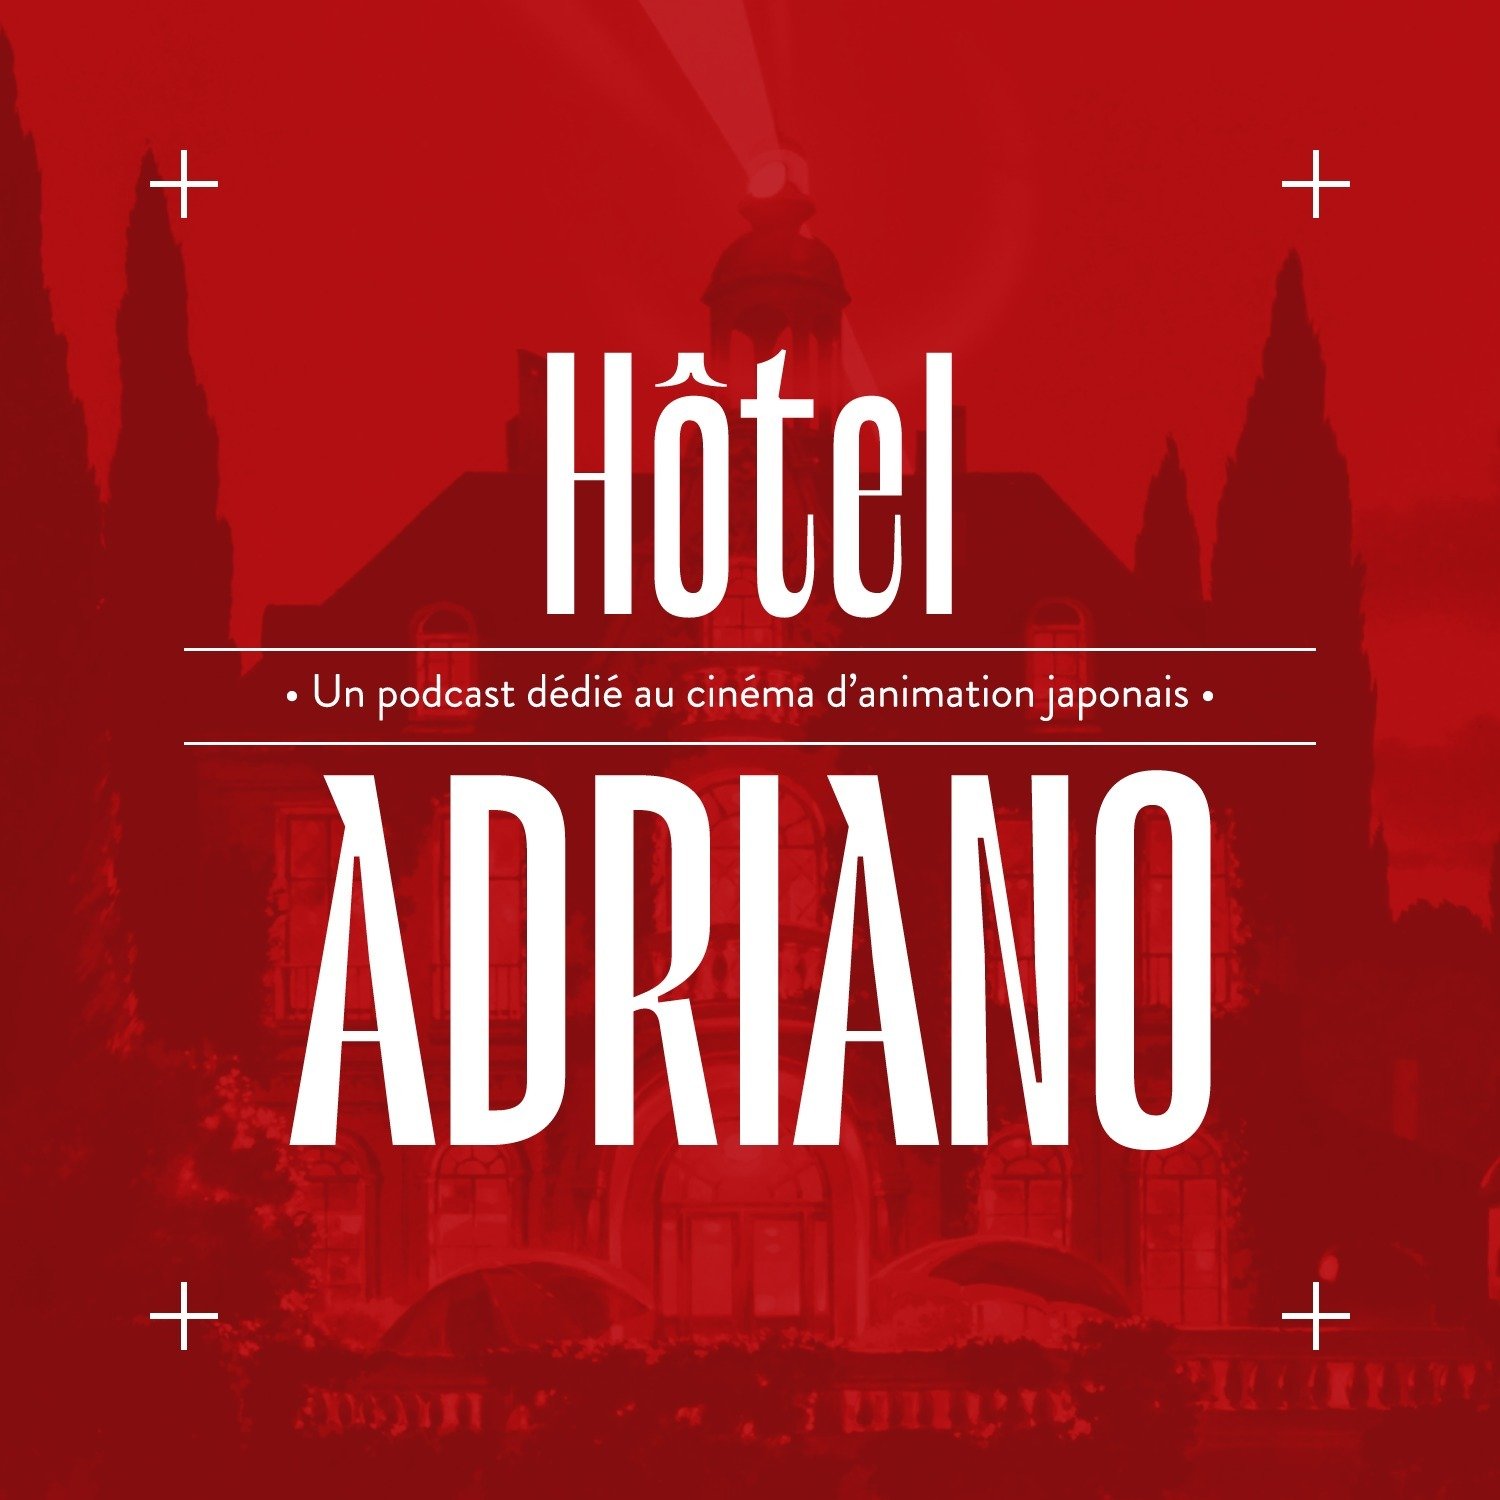 Hôtel ADRIANO